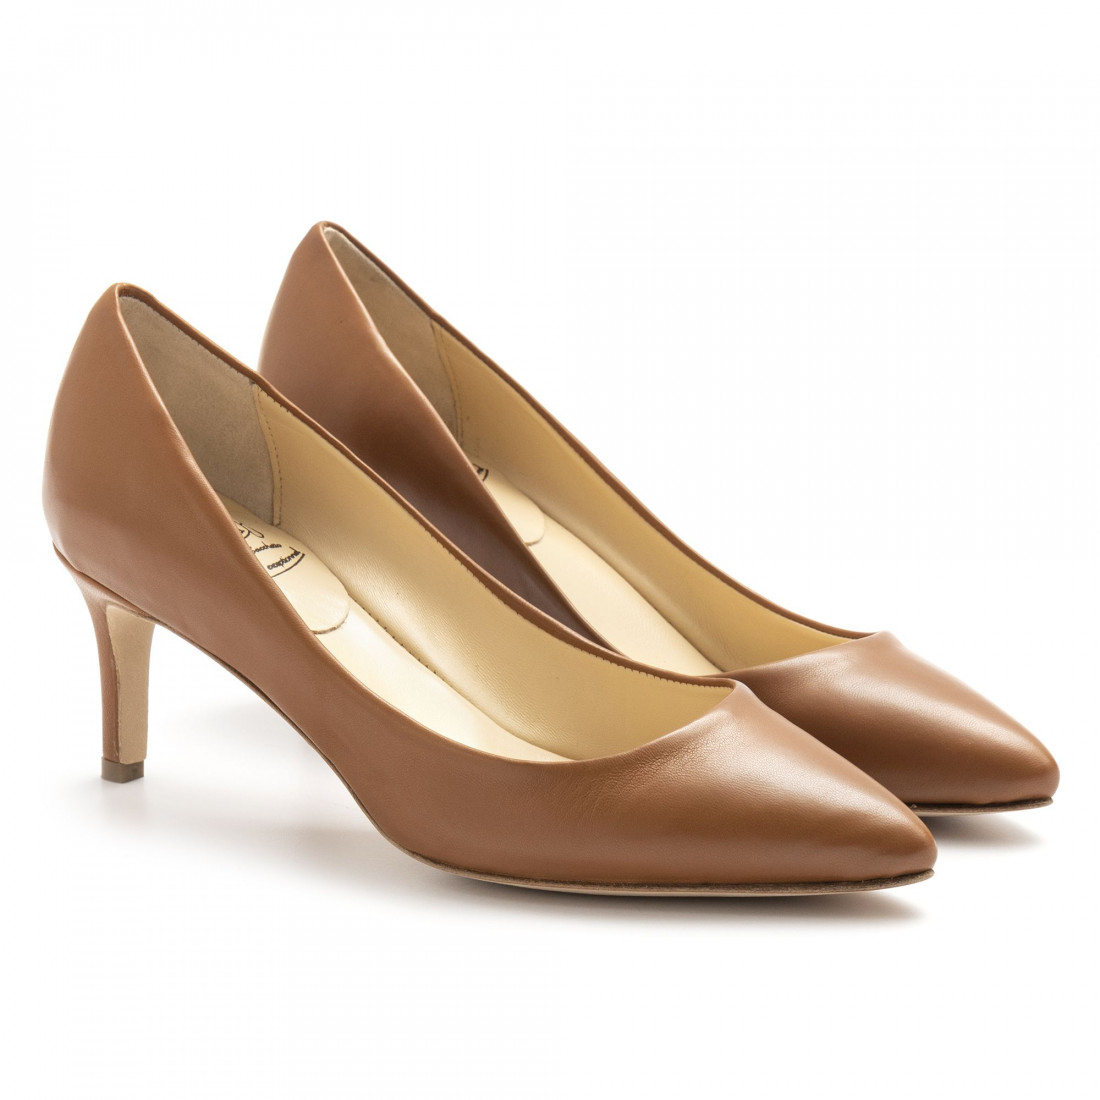 Brown L'Arianna pumps with medium heel